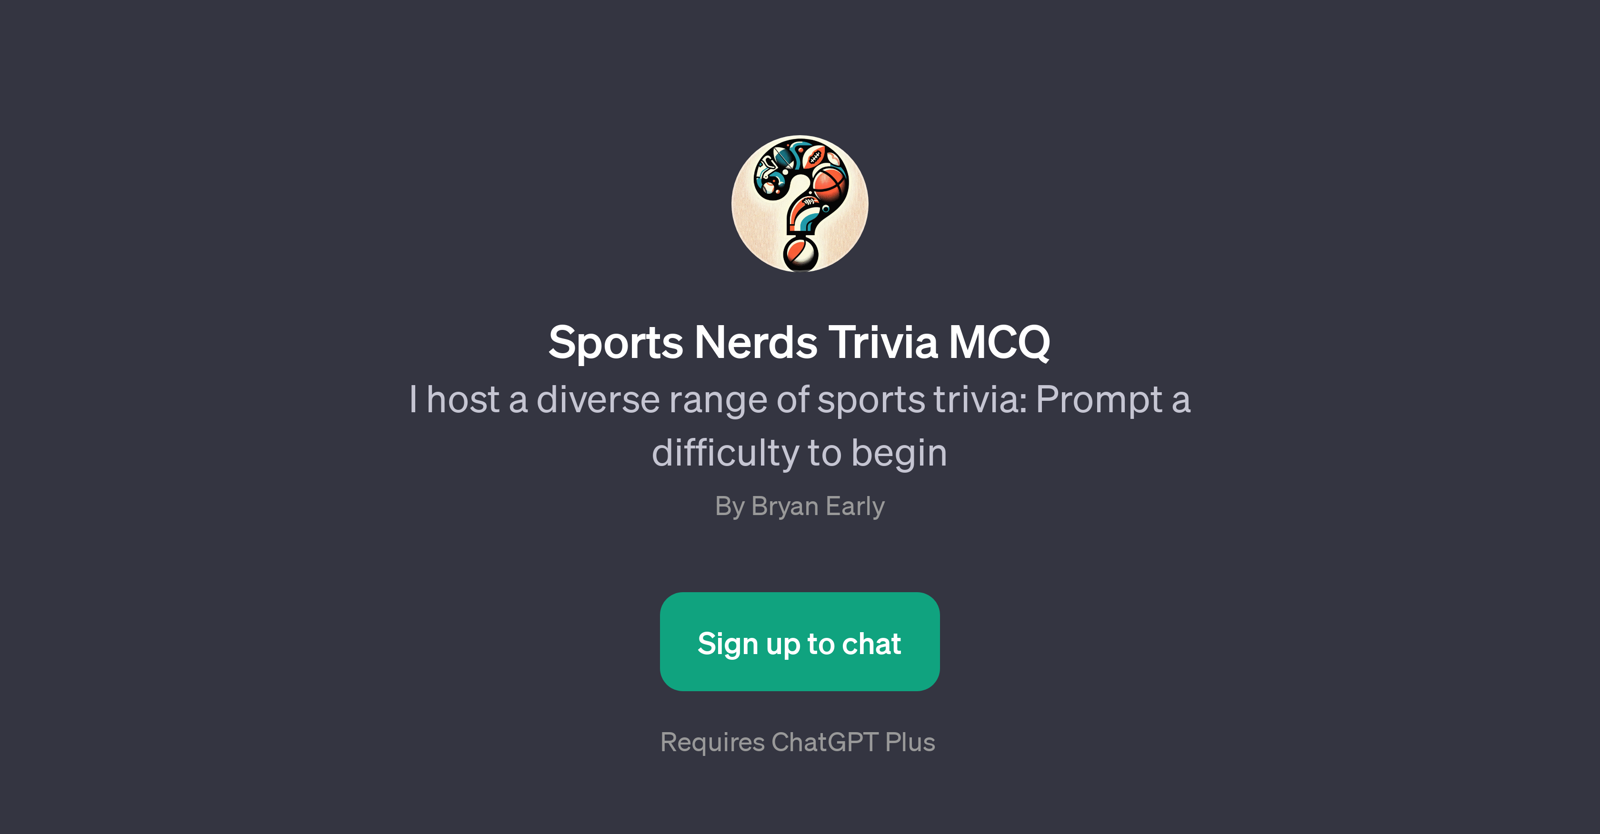 Sports Nerds Trivia MCQ website